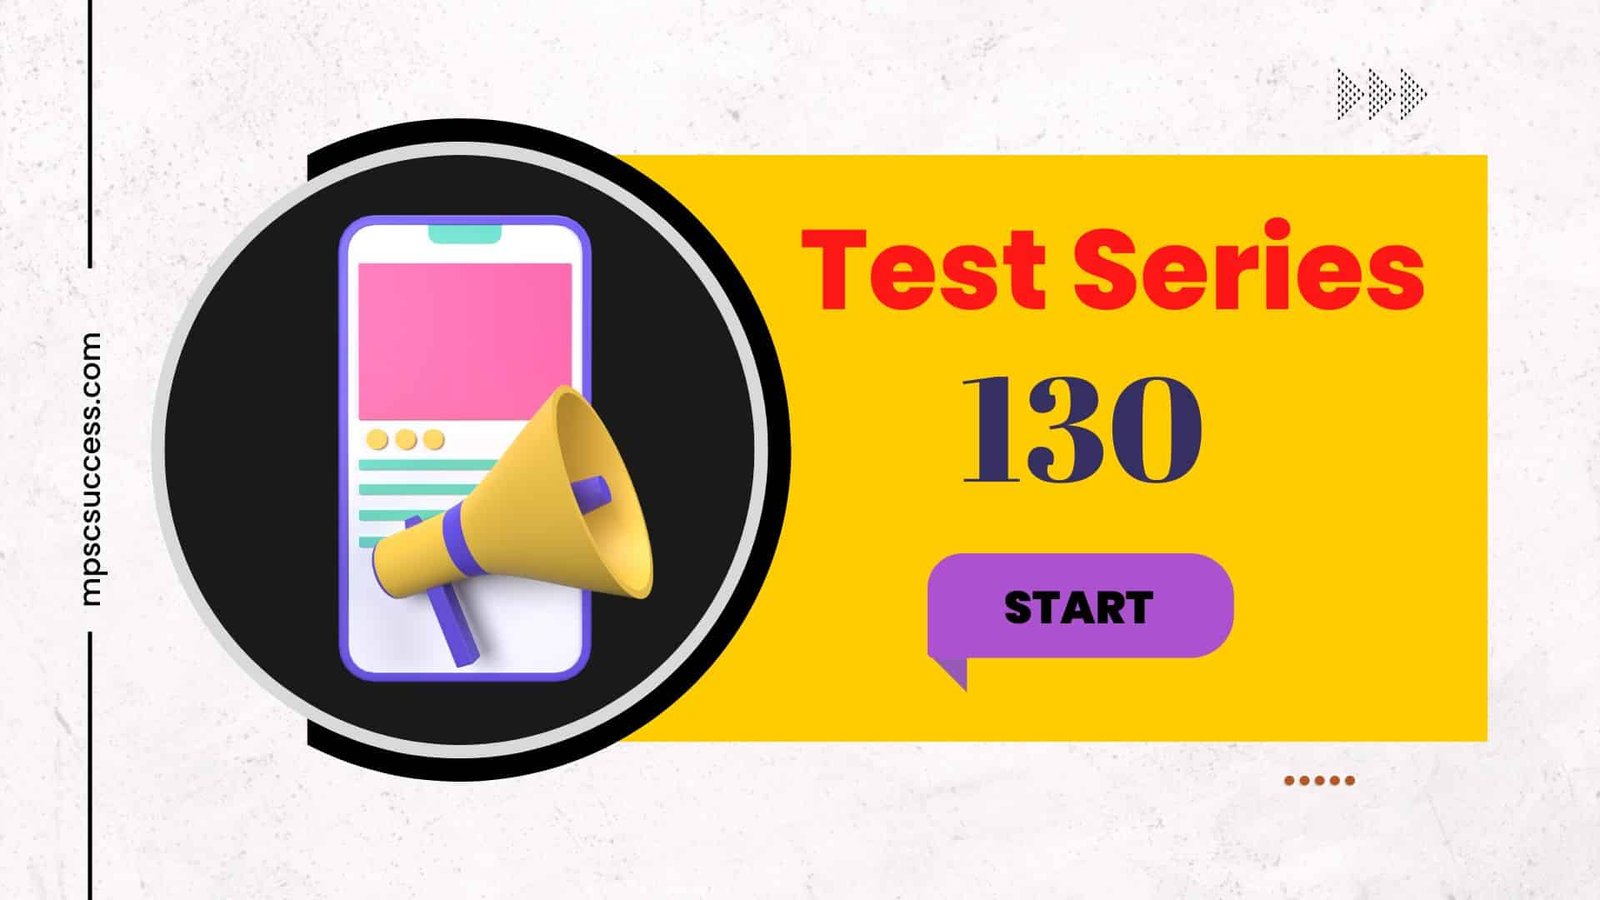 Test Series 130